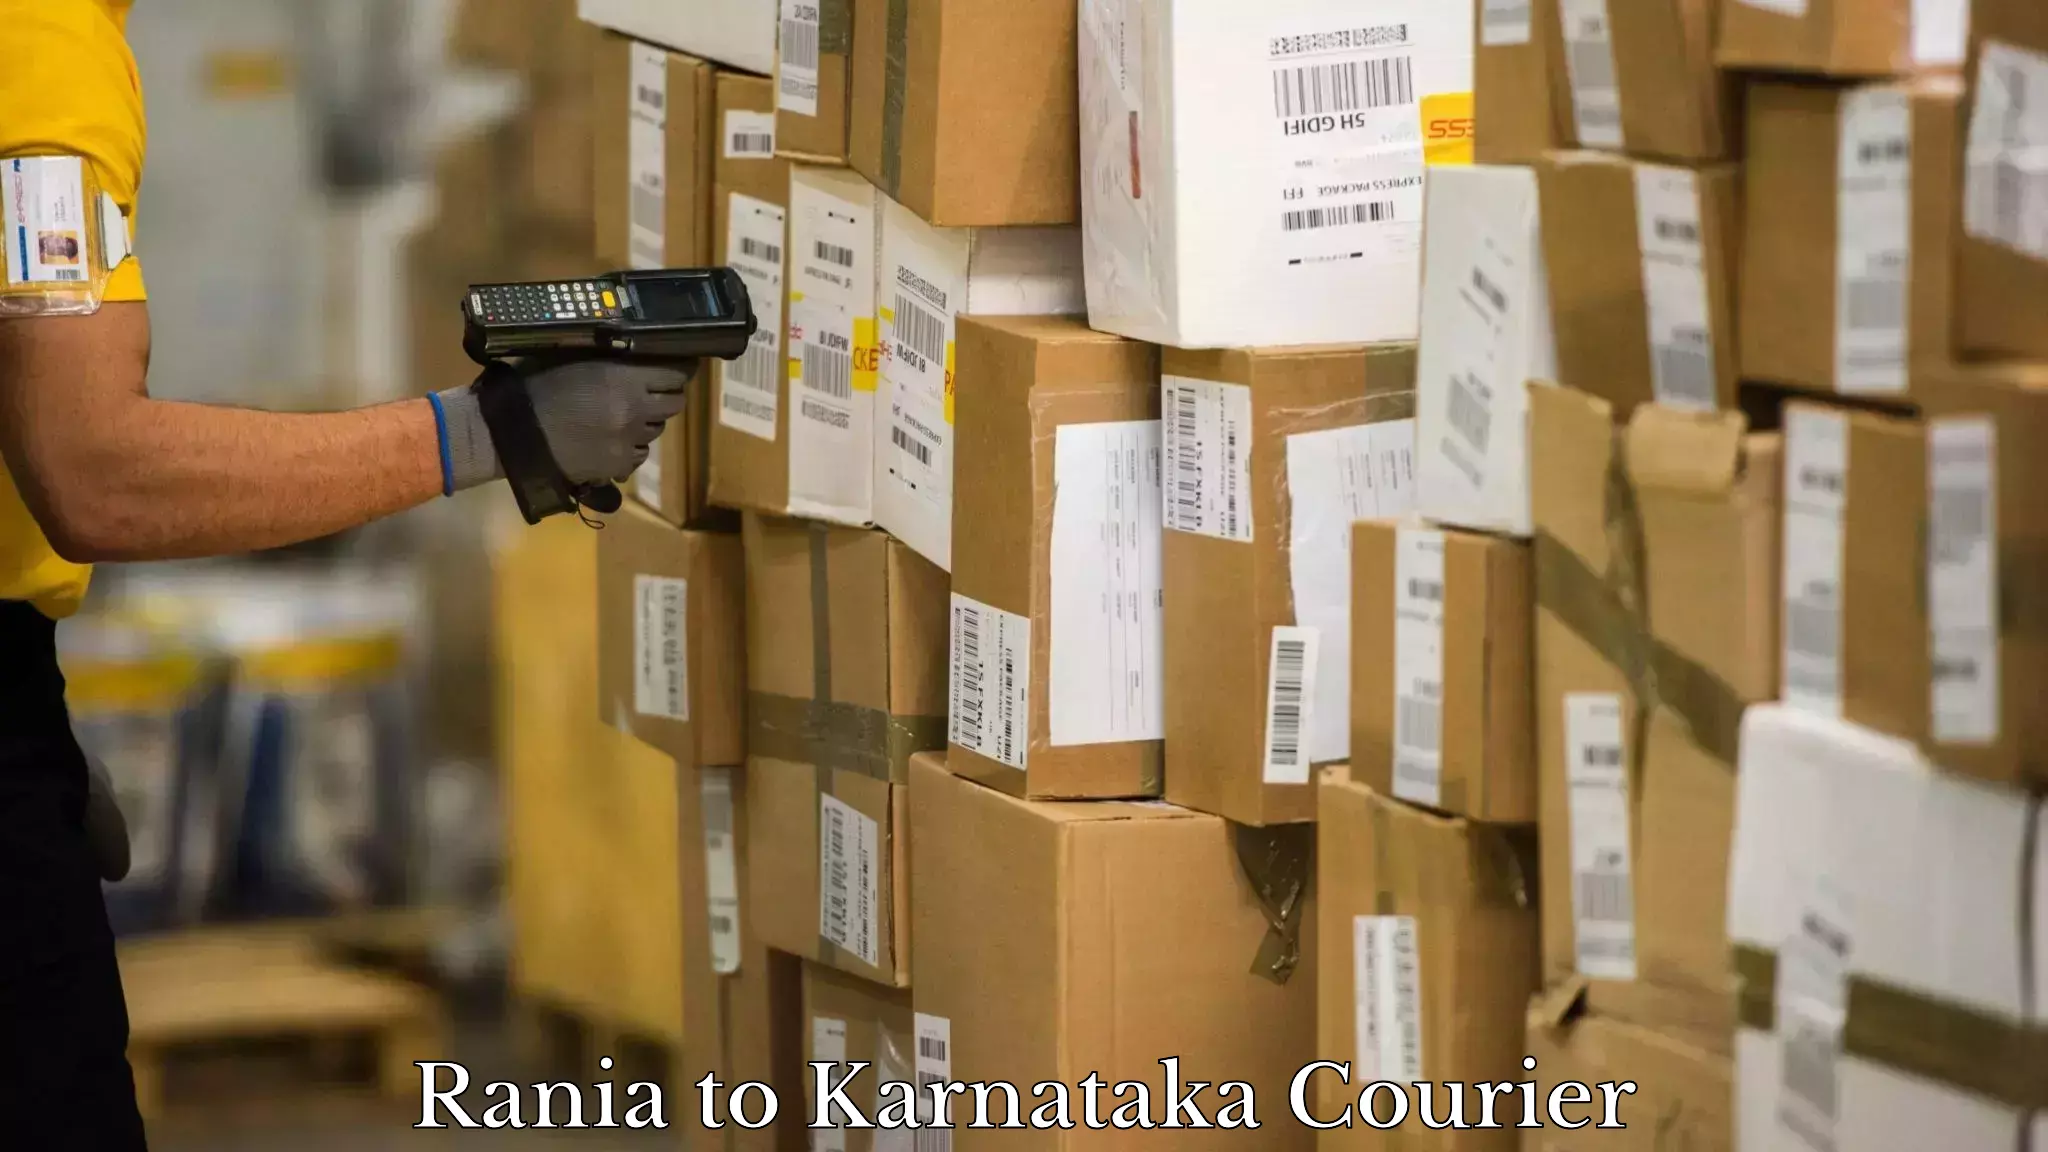 Subscription-based courier Rania to Karnataka